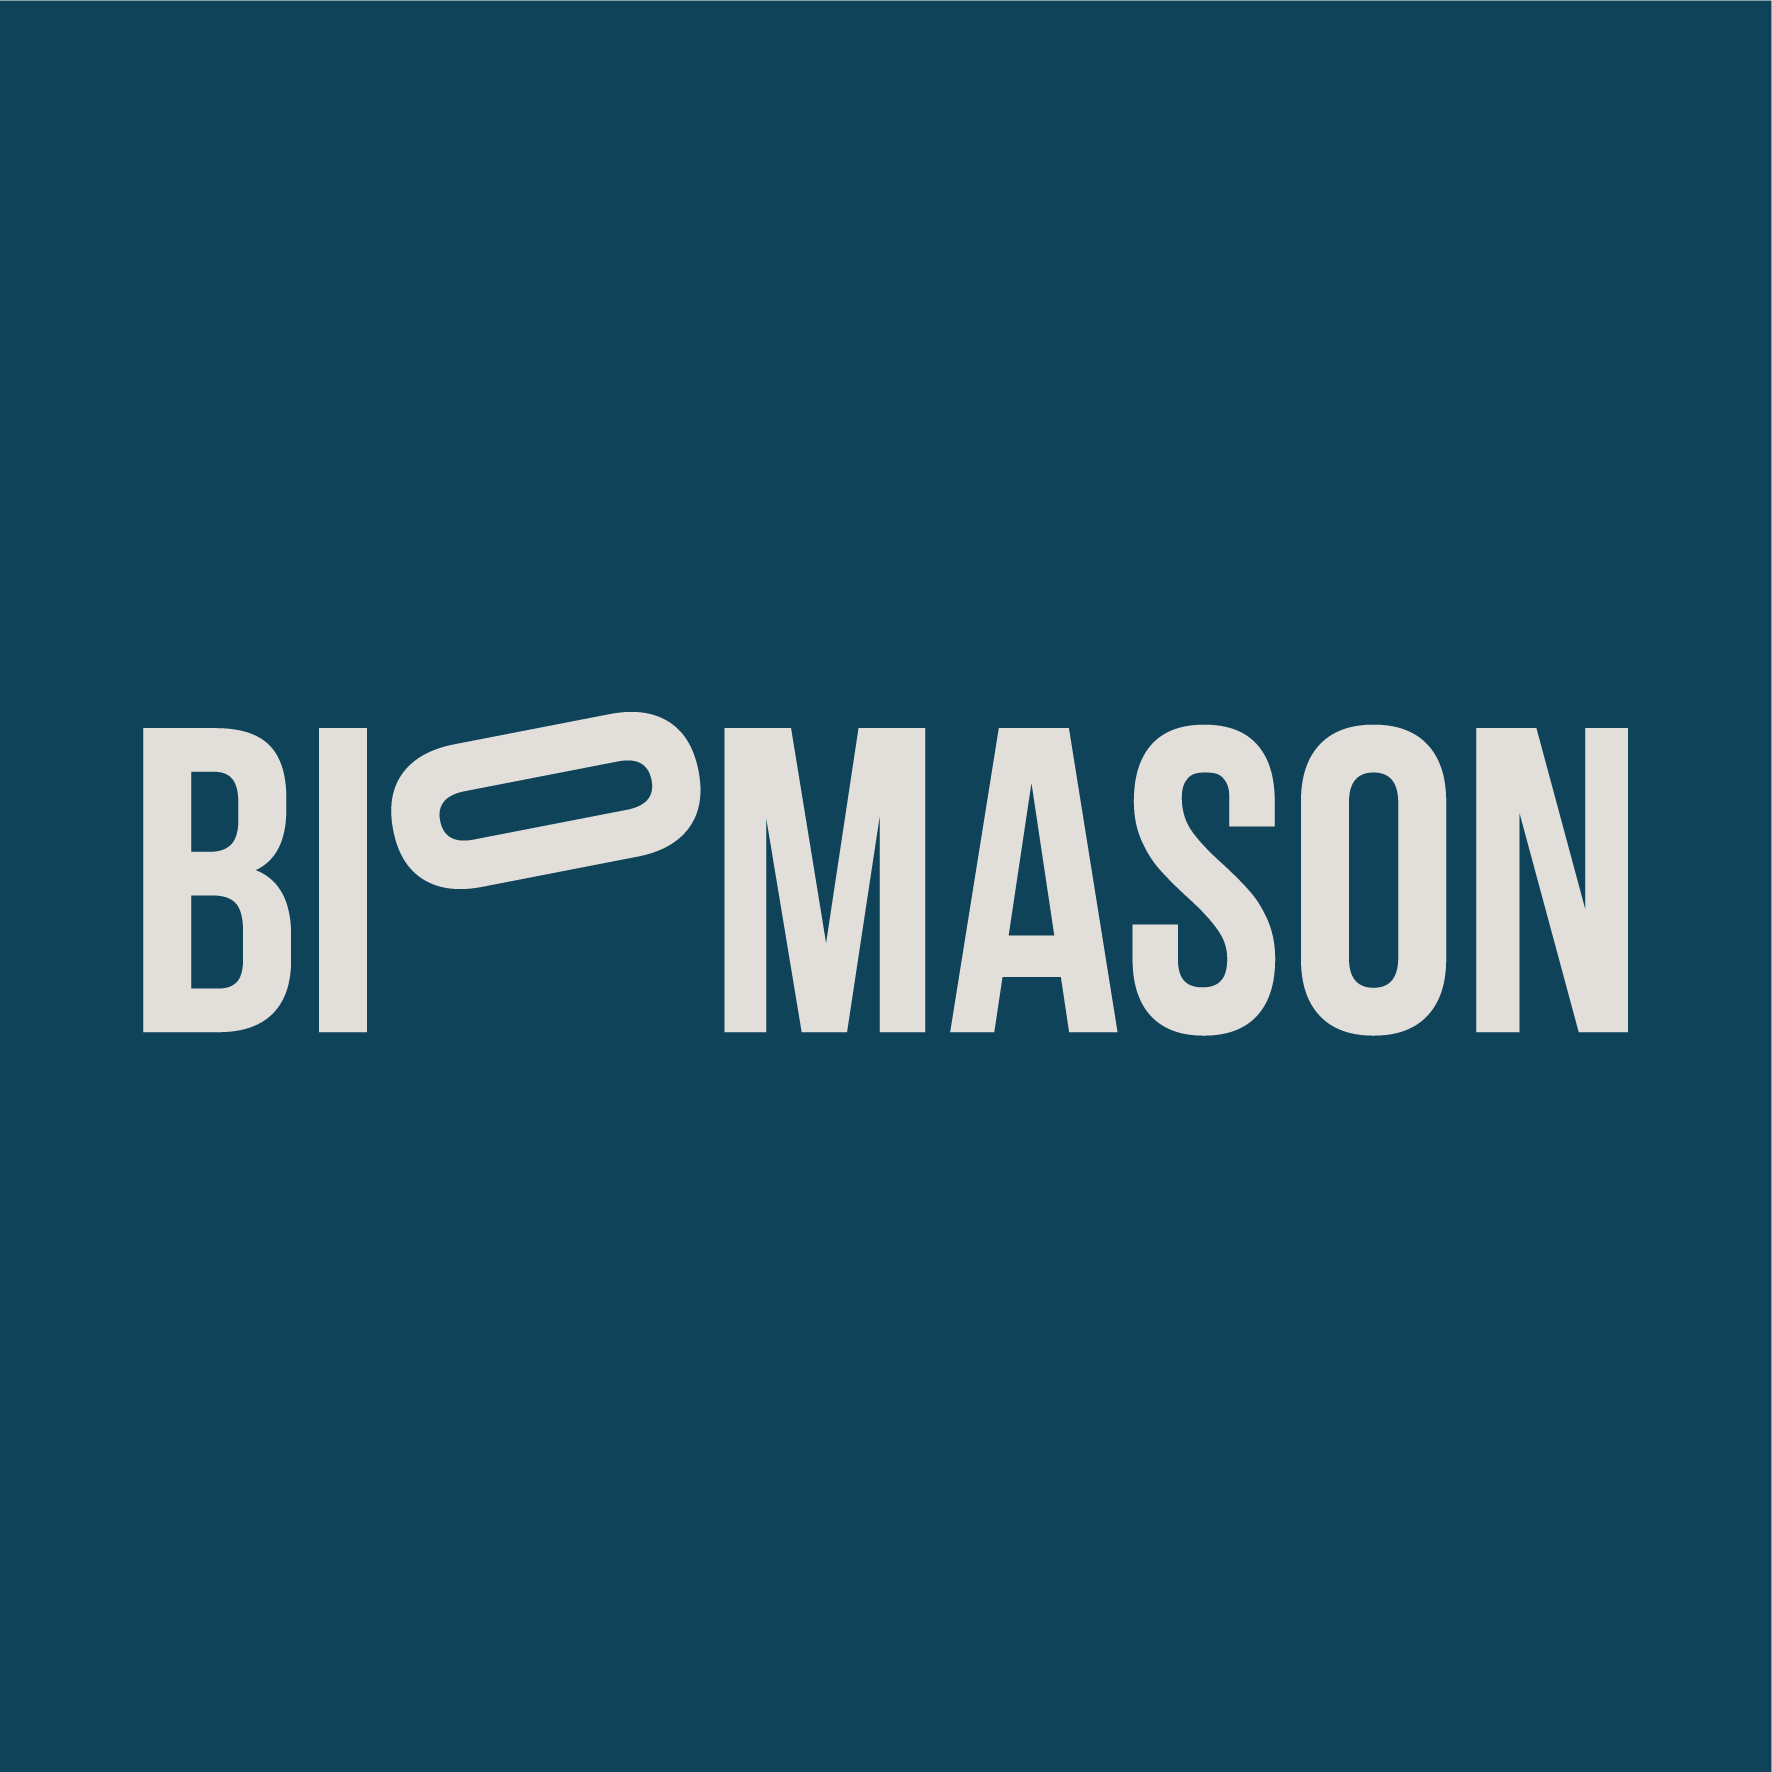 Biomason